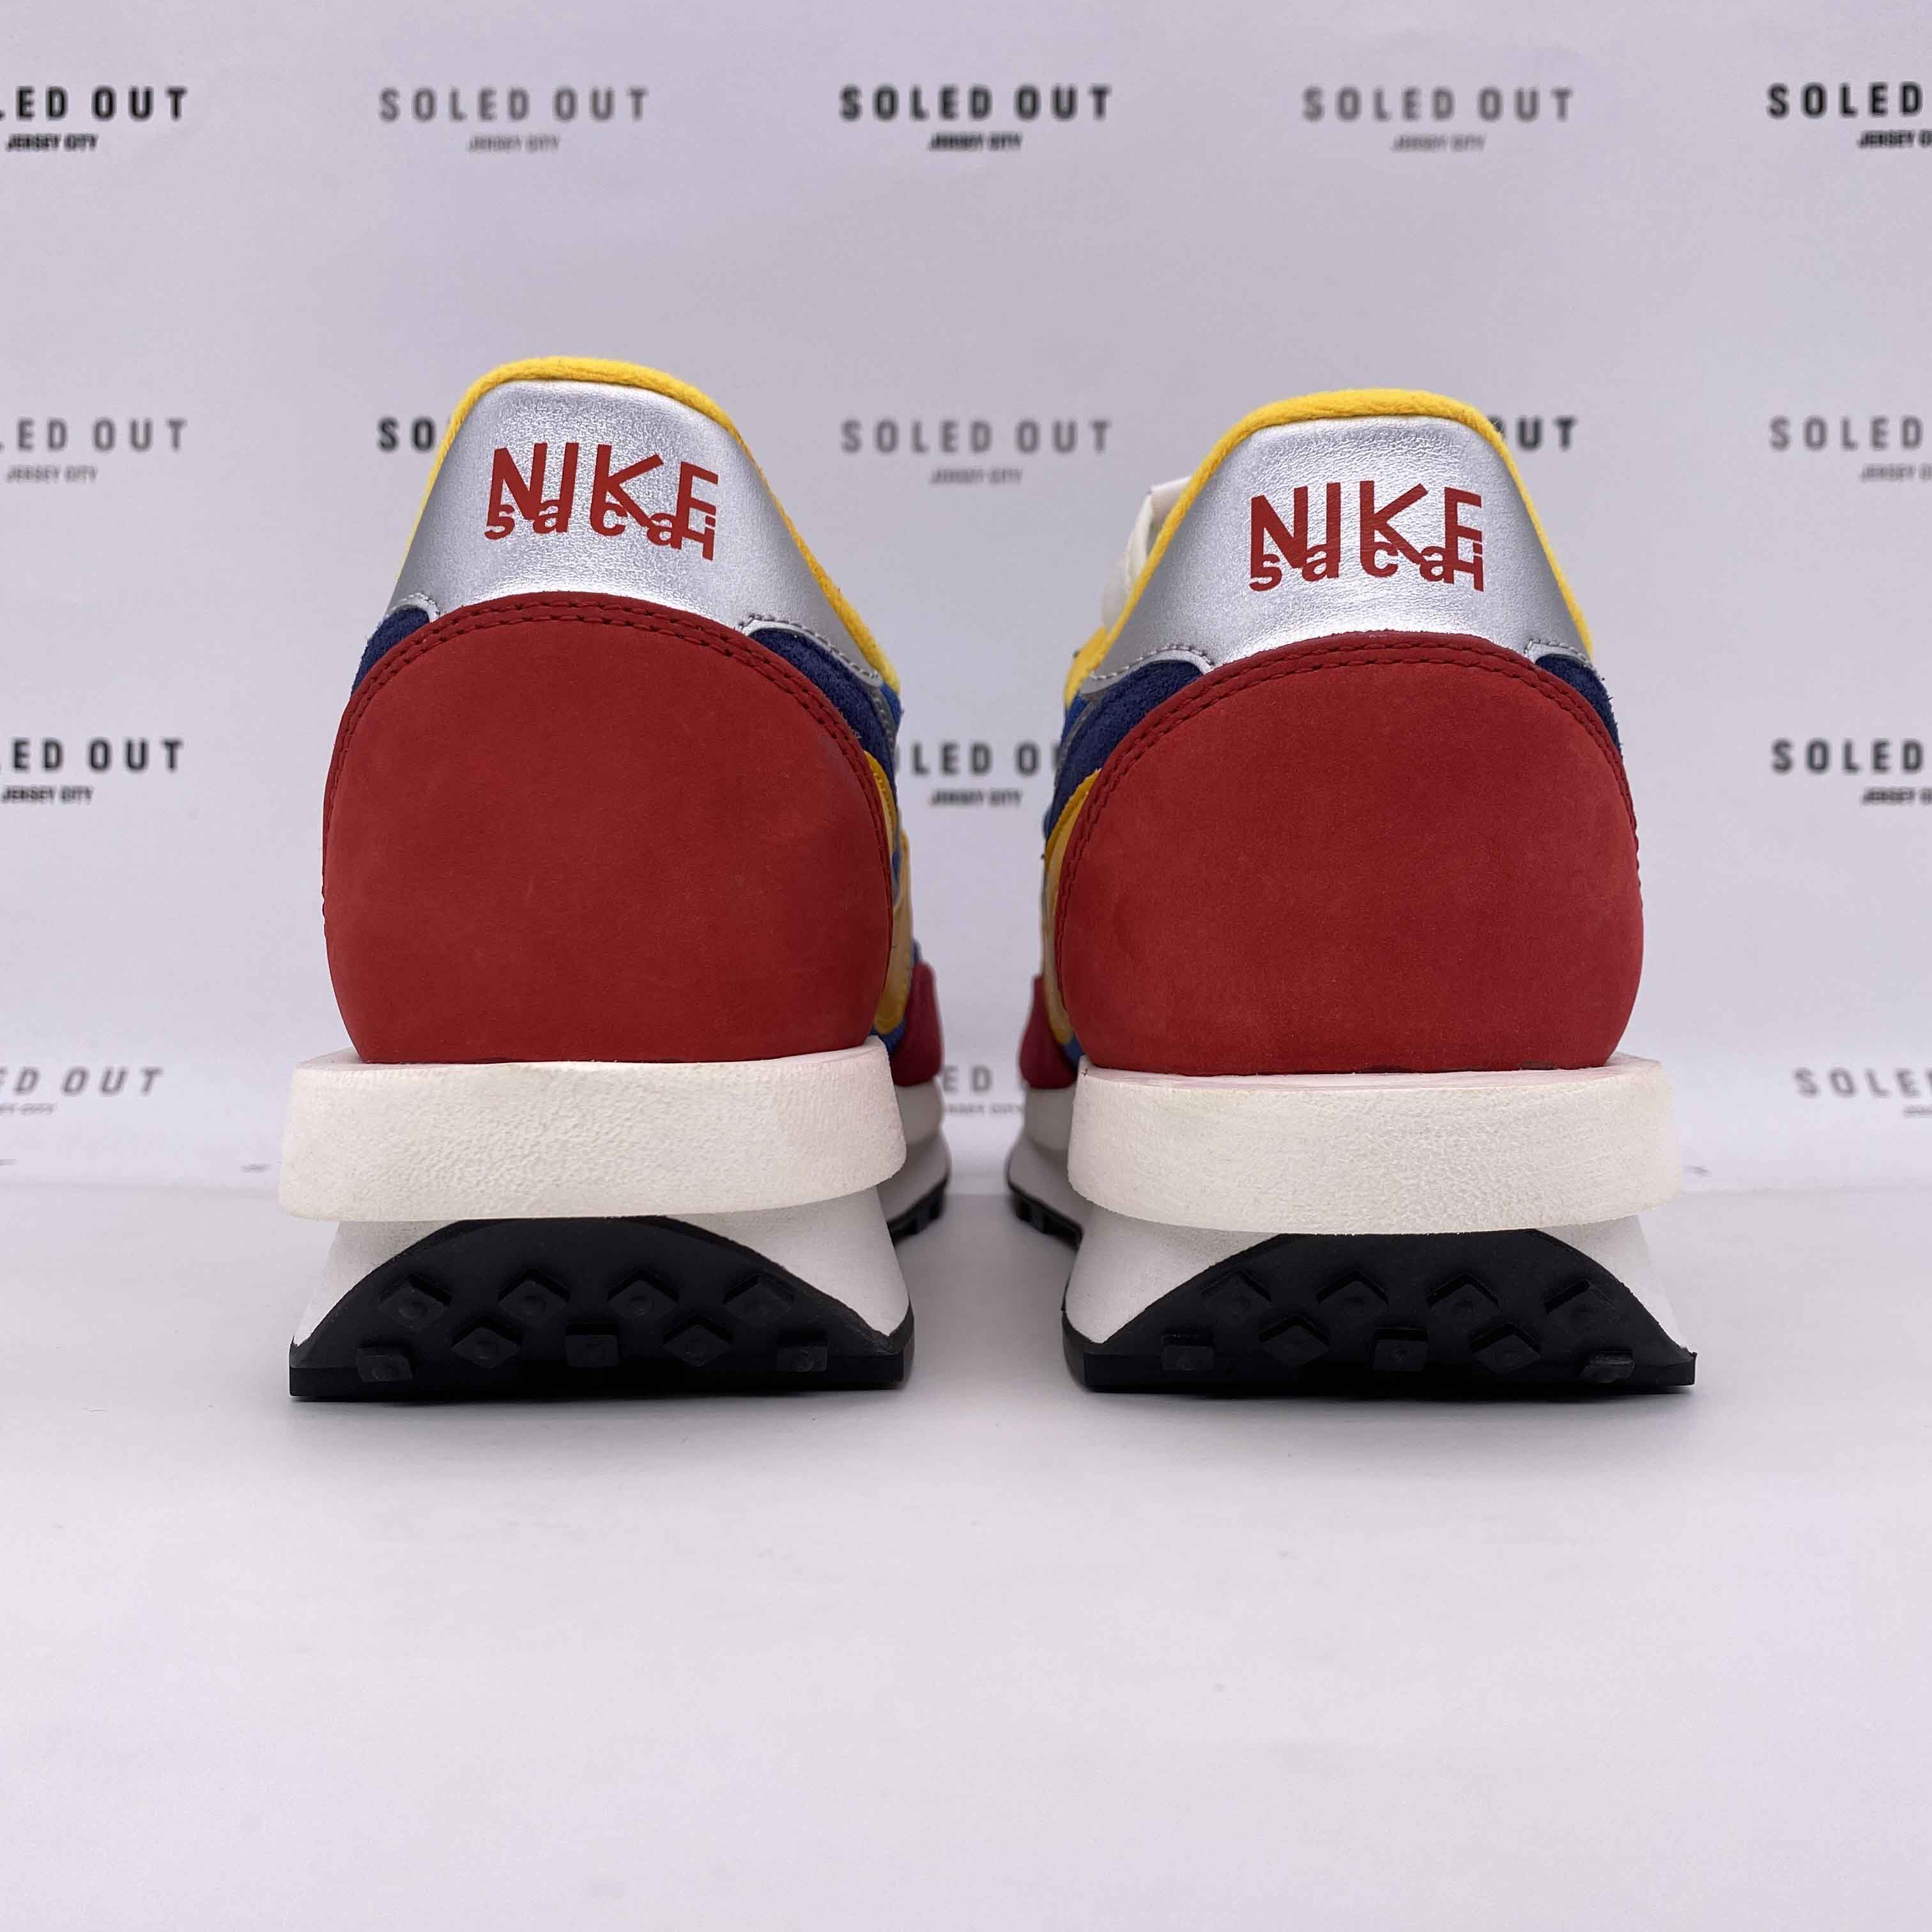 Nike LD WAFFLE / Sacai "Blue Multi" 2019 New Size 12